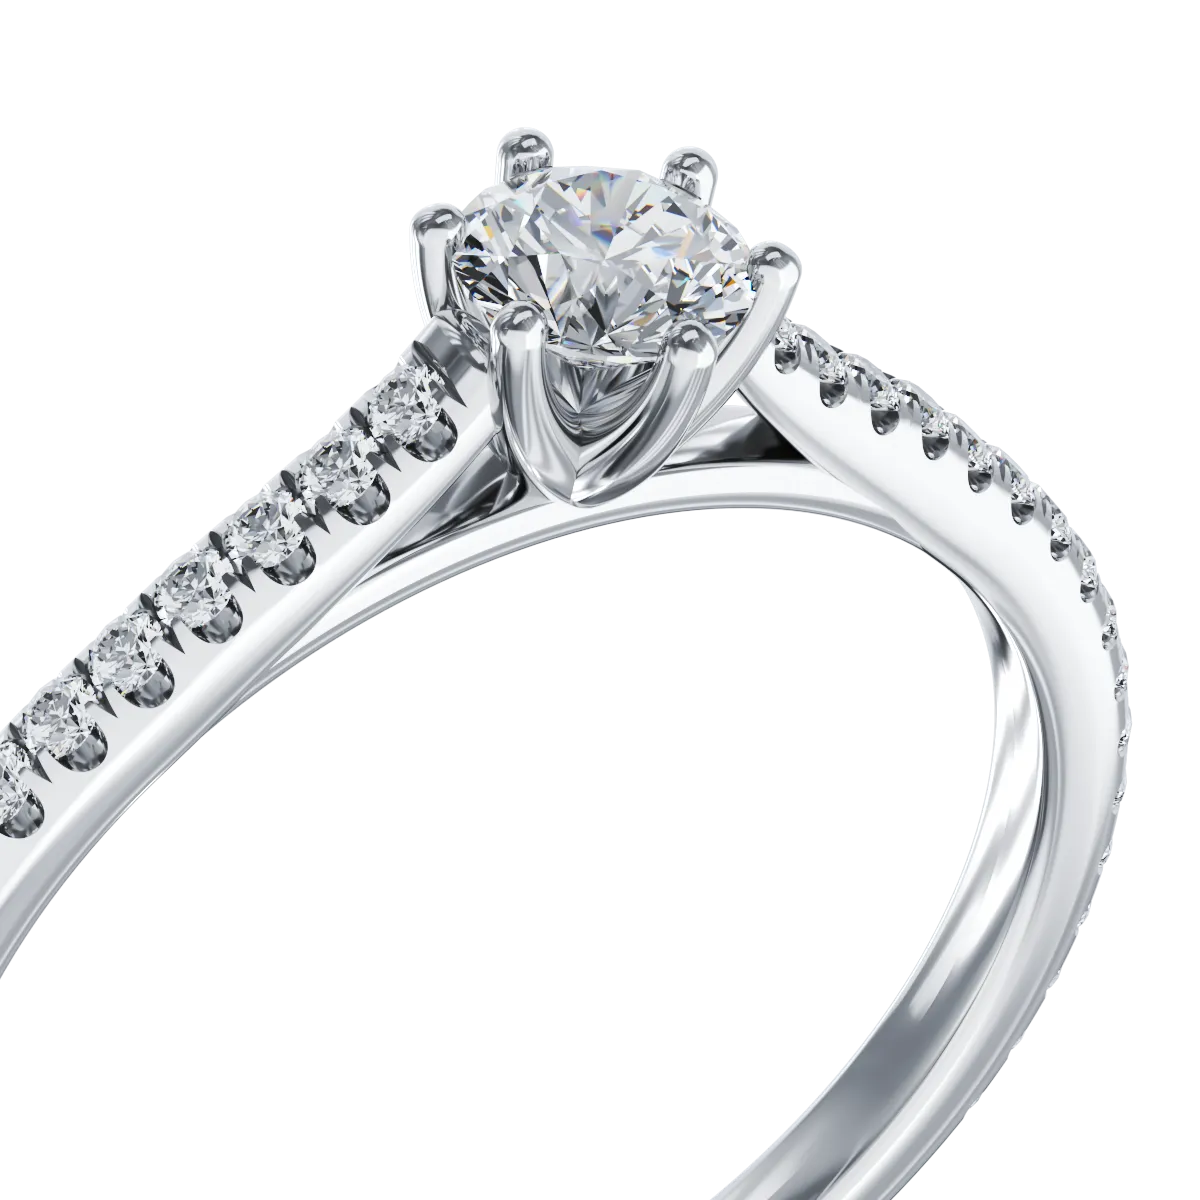 Platinum engagement ring with 0.25ct diamond and 0.177ct diamonds